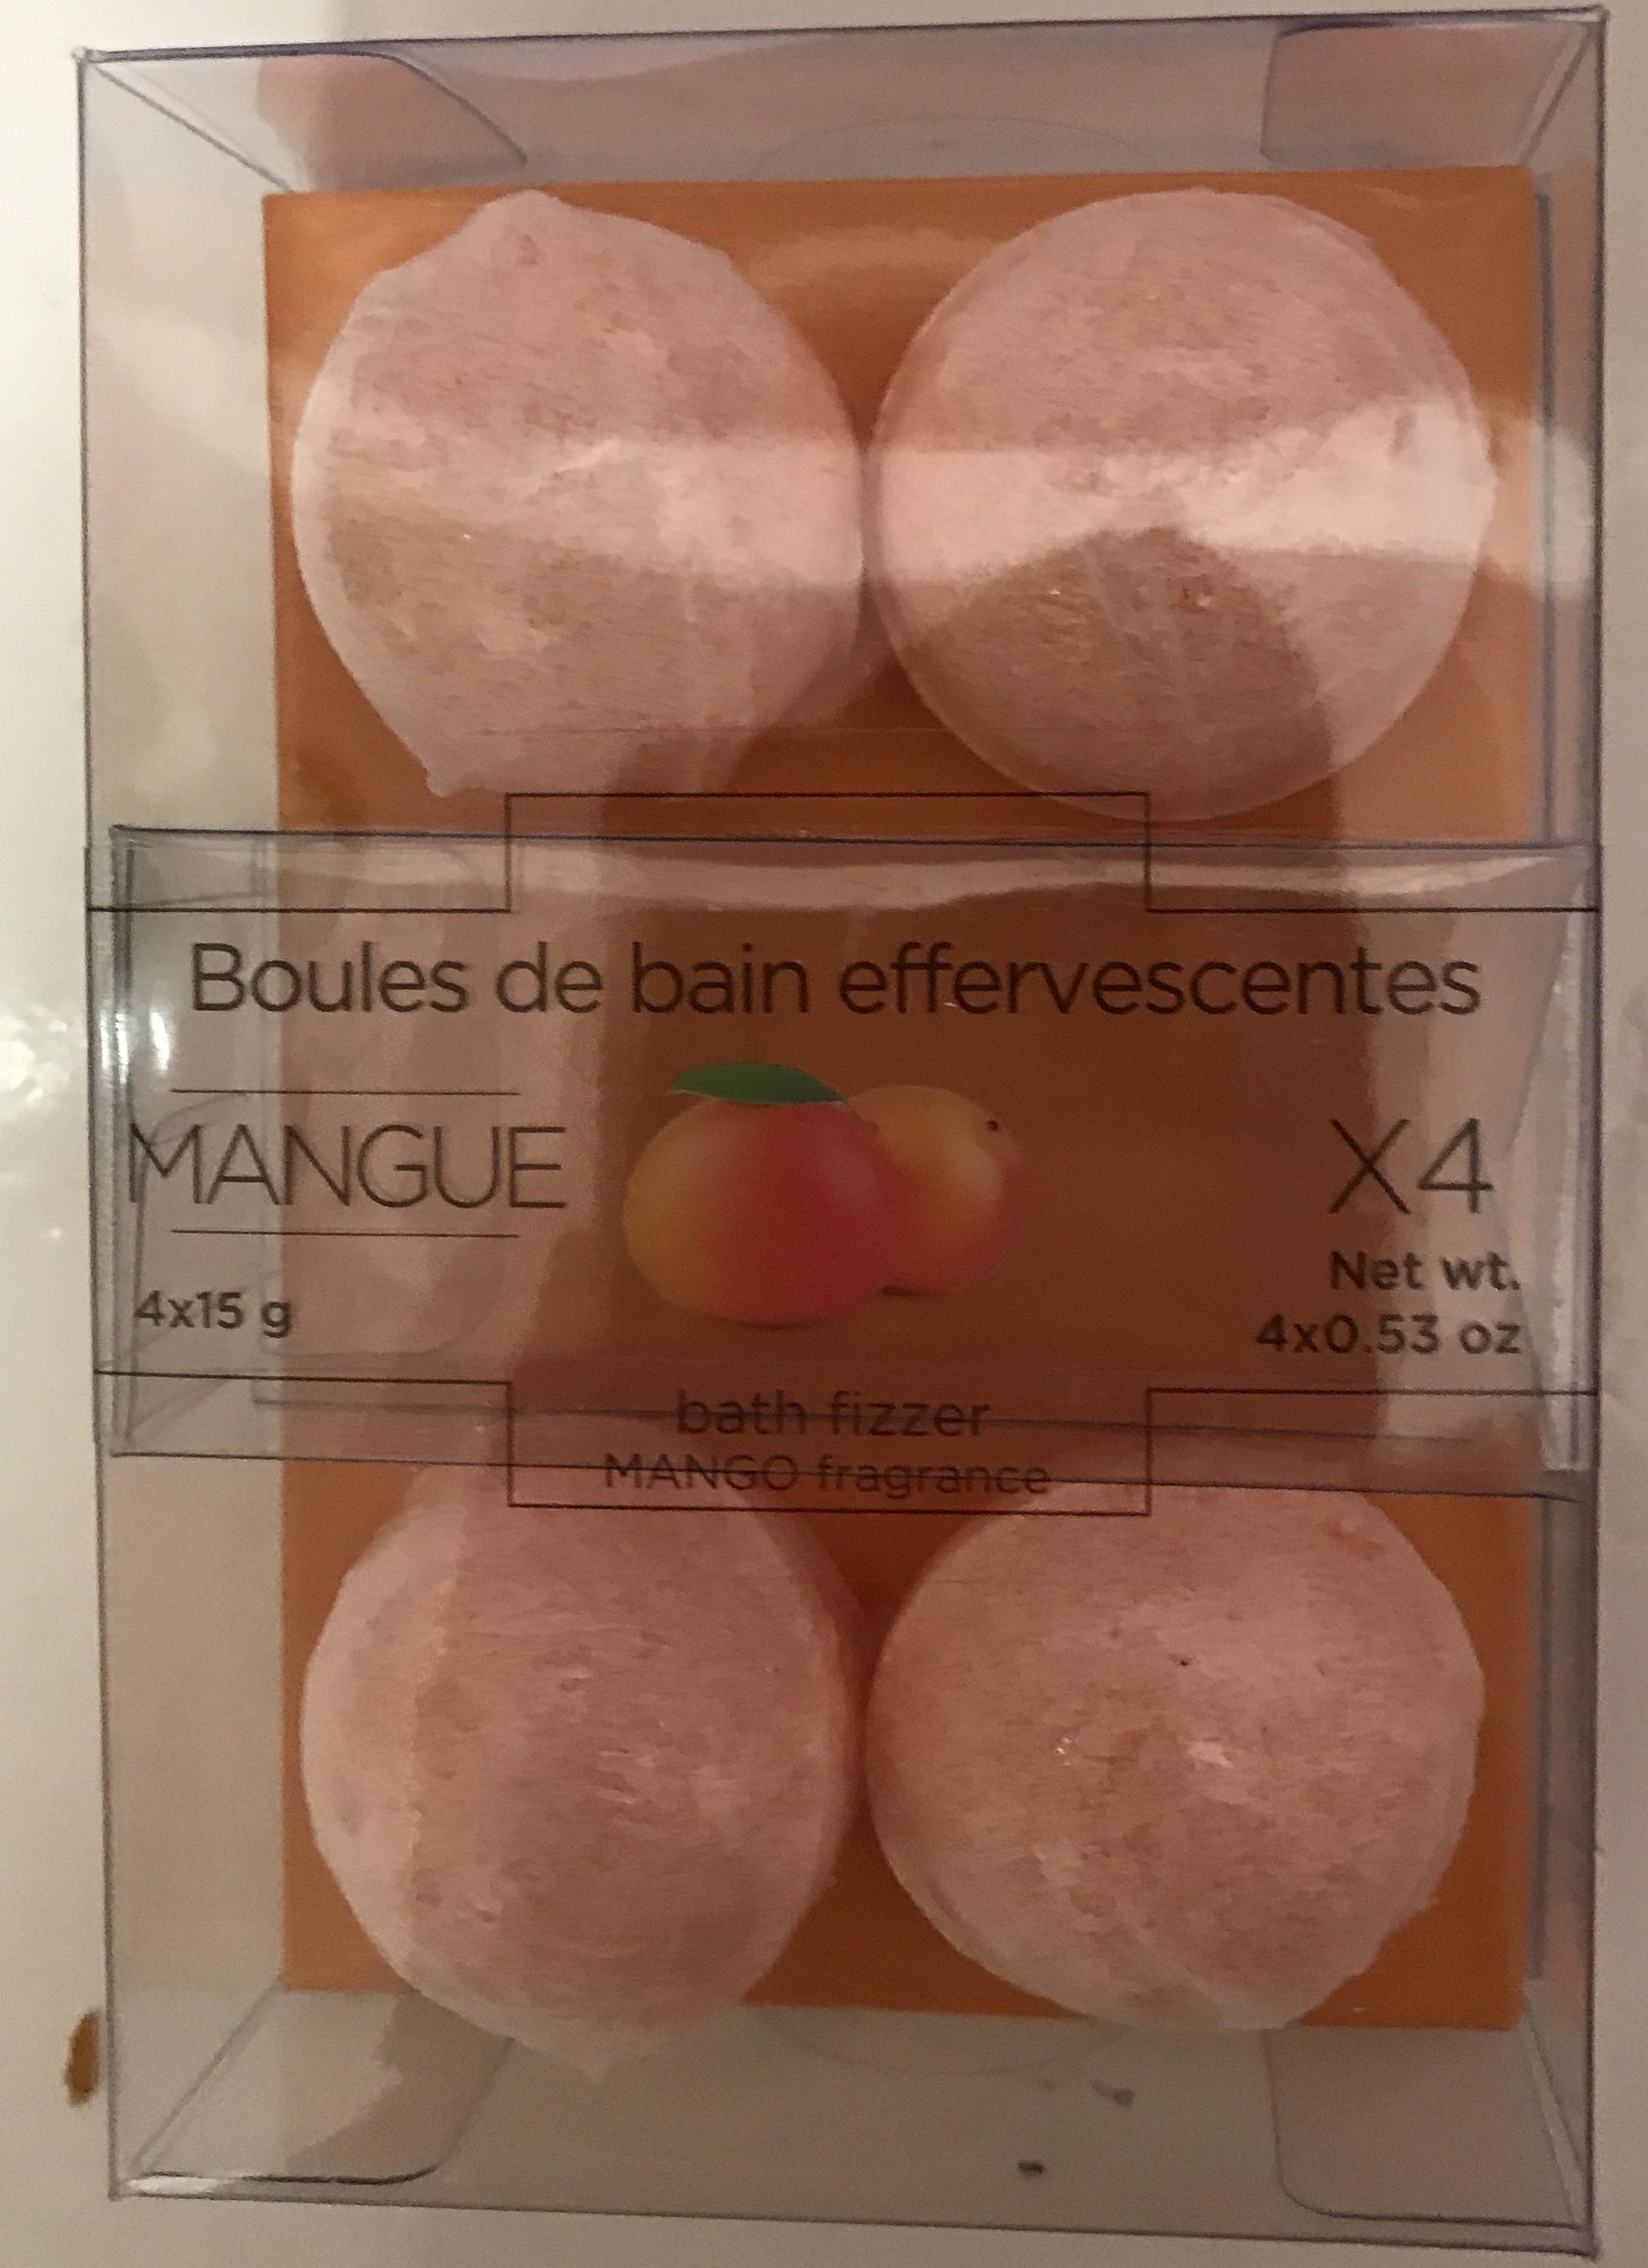 Boules de bain effervescentes Mangue - Product - fr